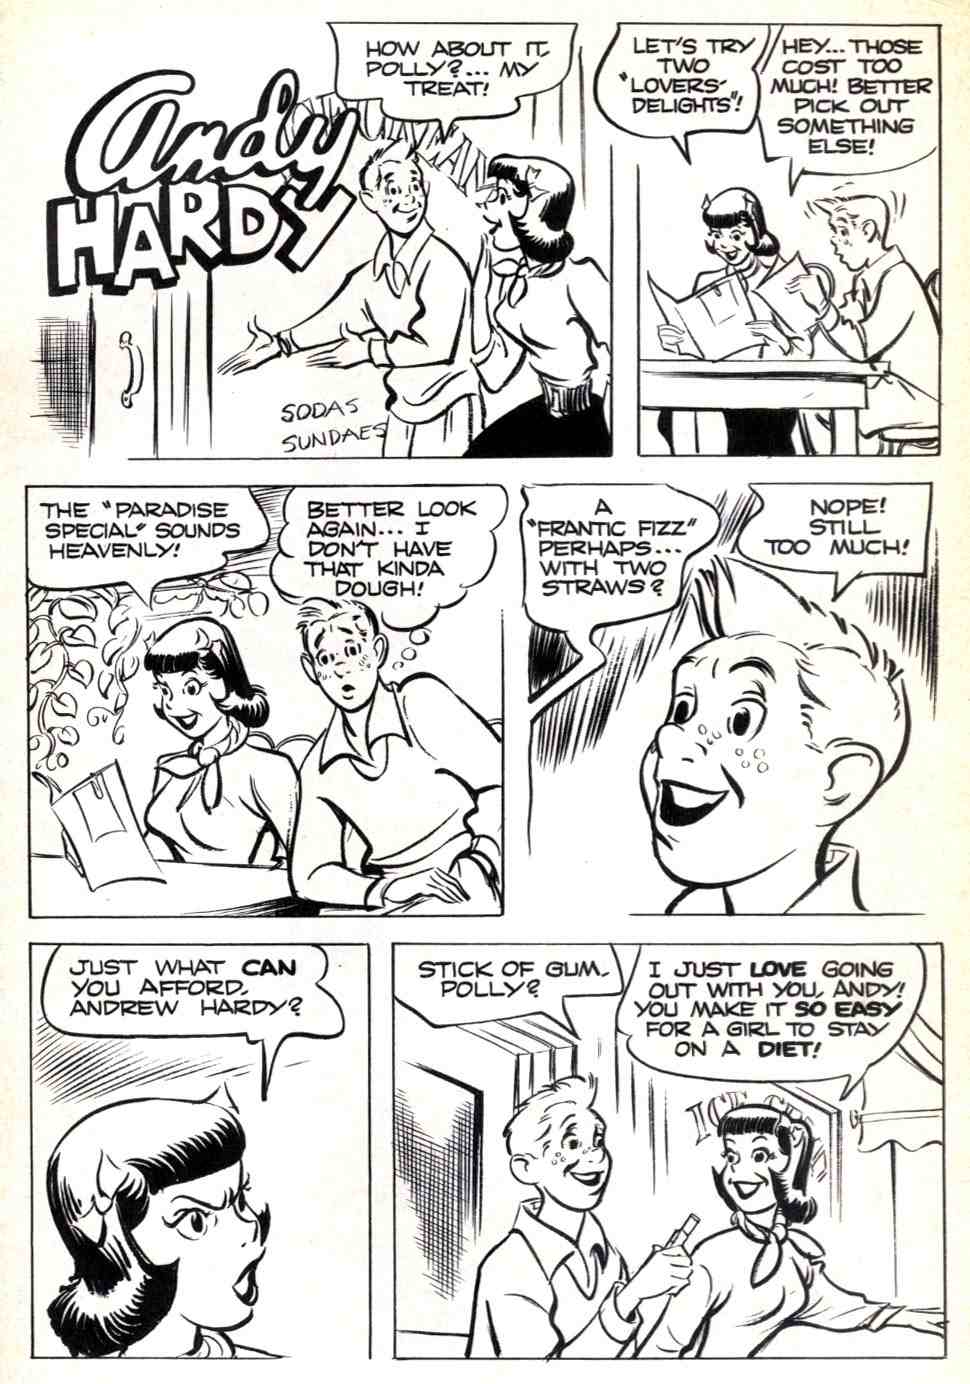 Andy-Hardy-Comic-Strips (35)